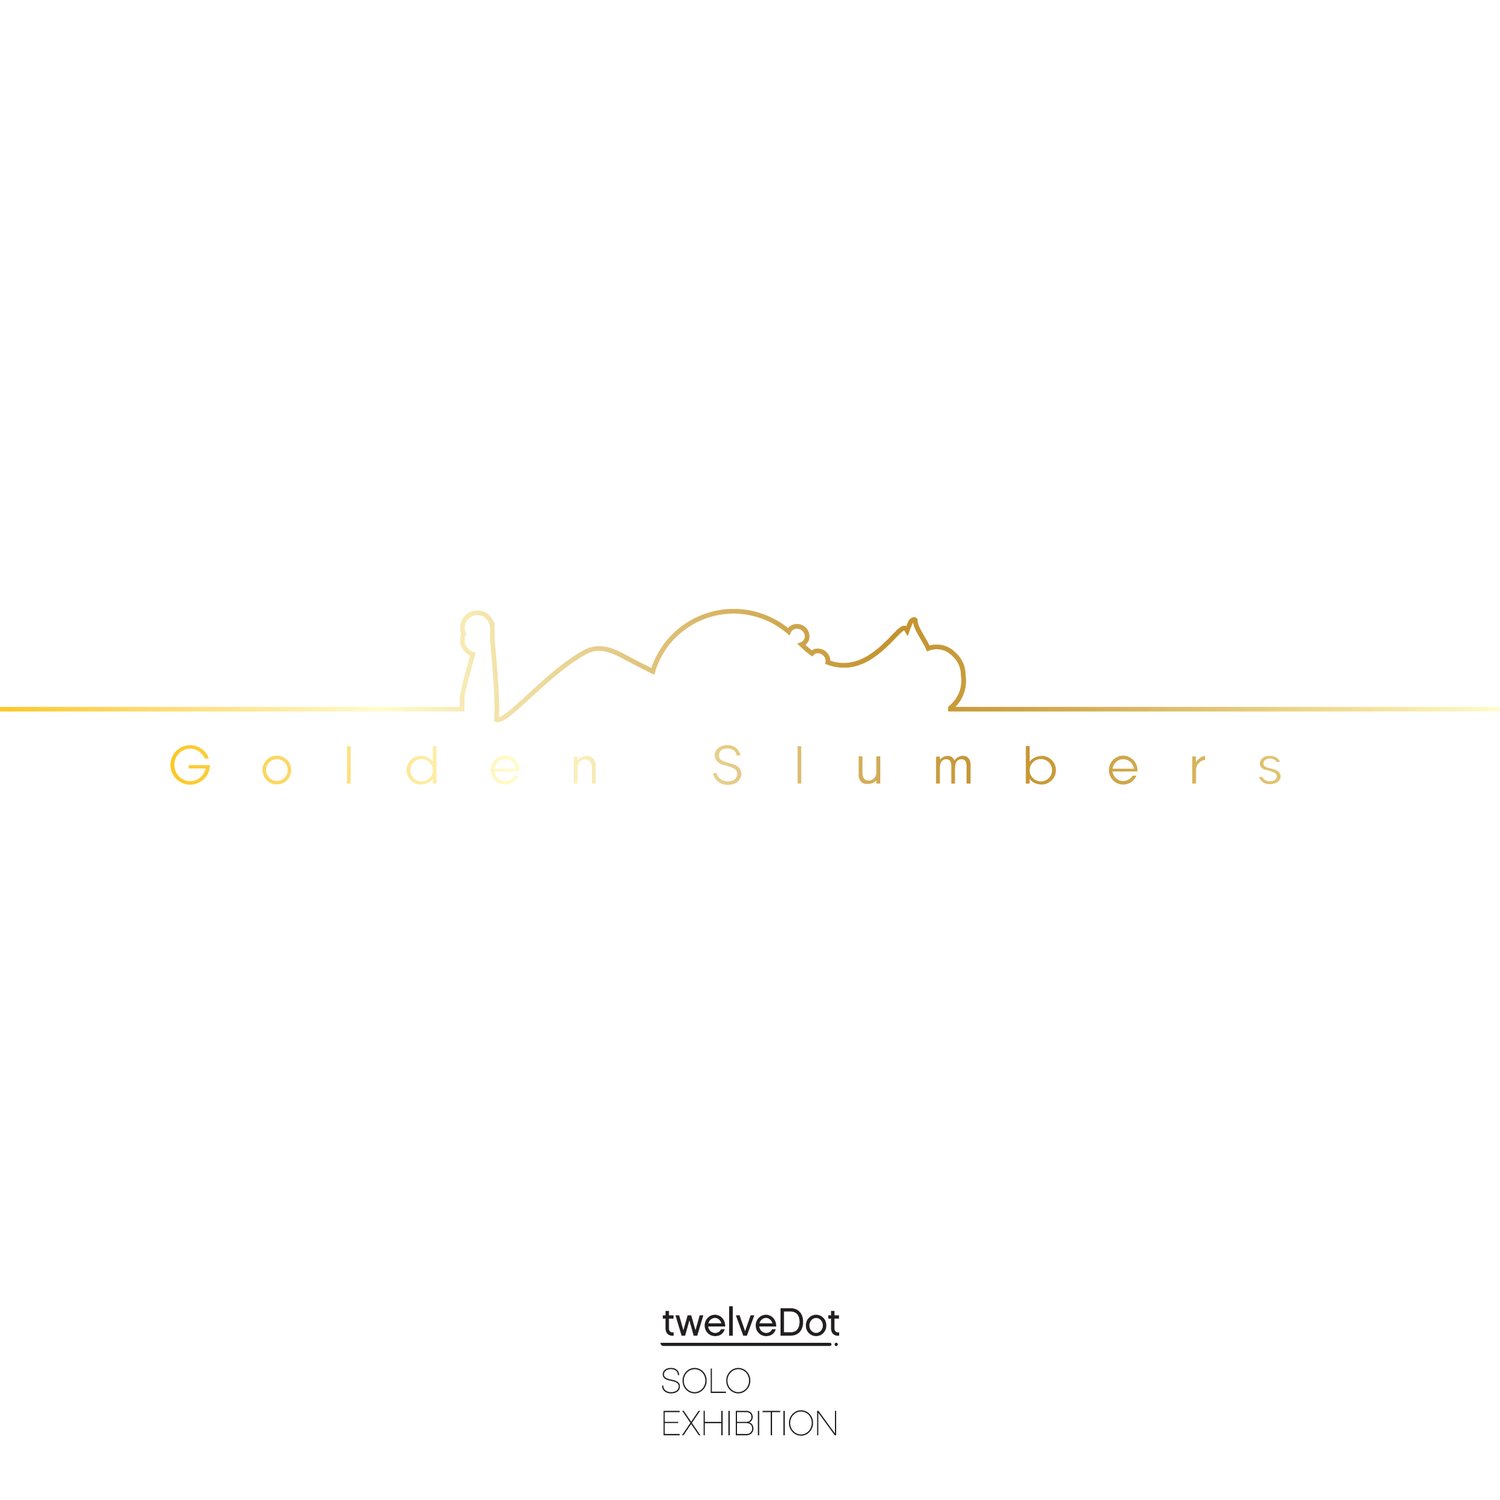 Image of Golden Slumbers